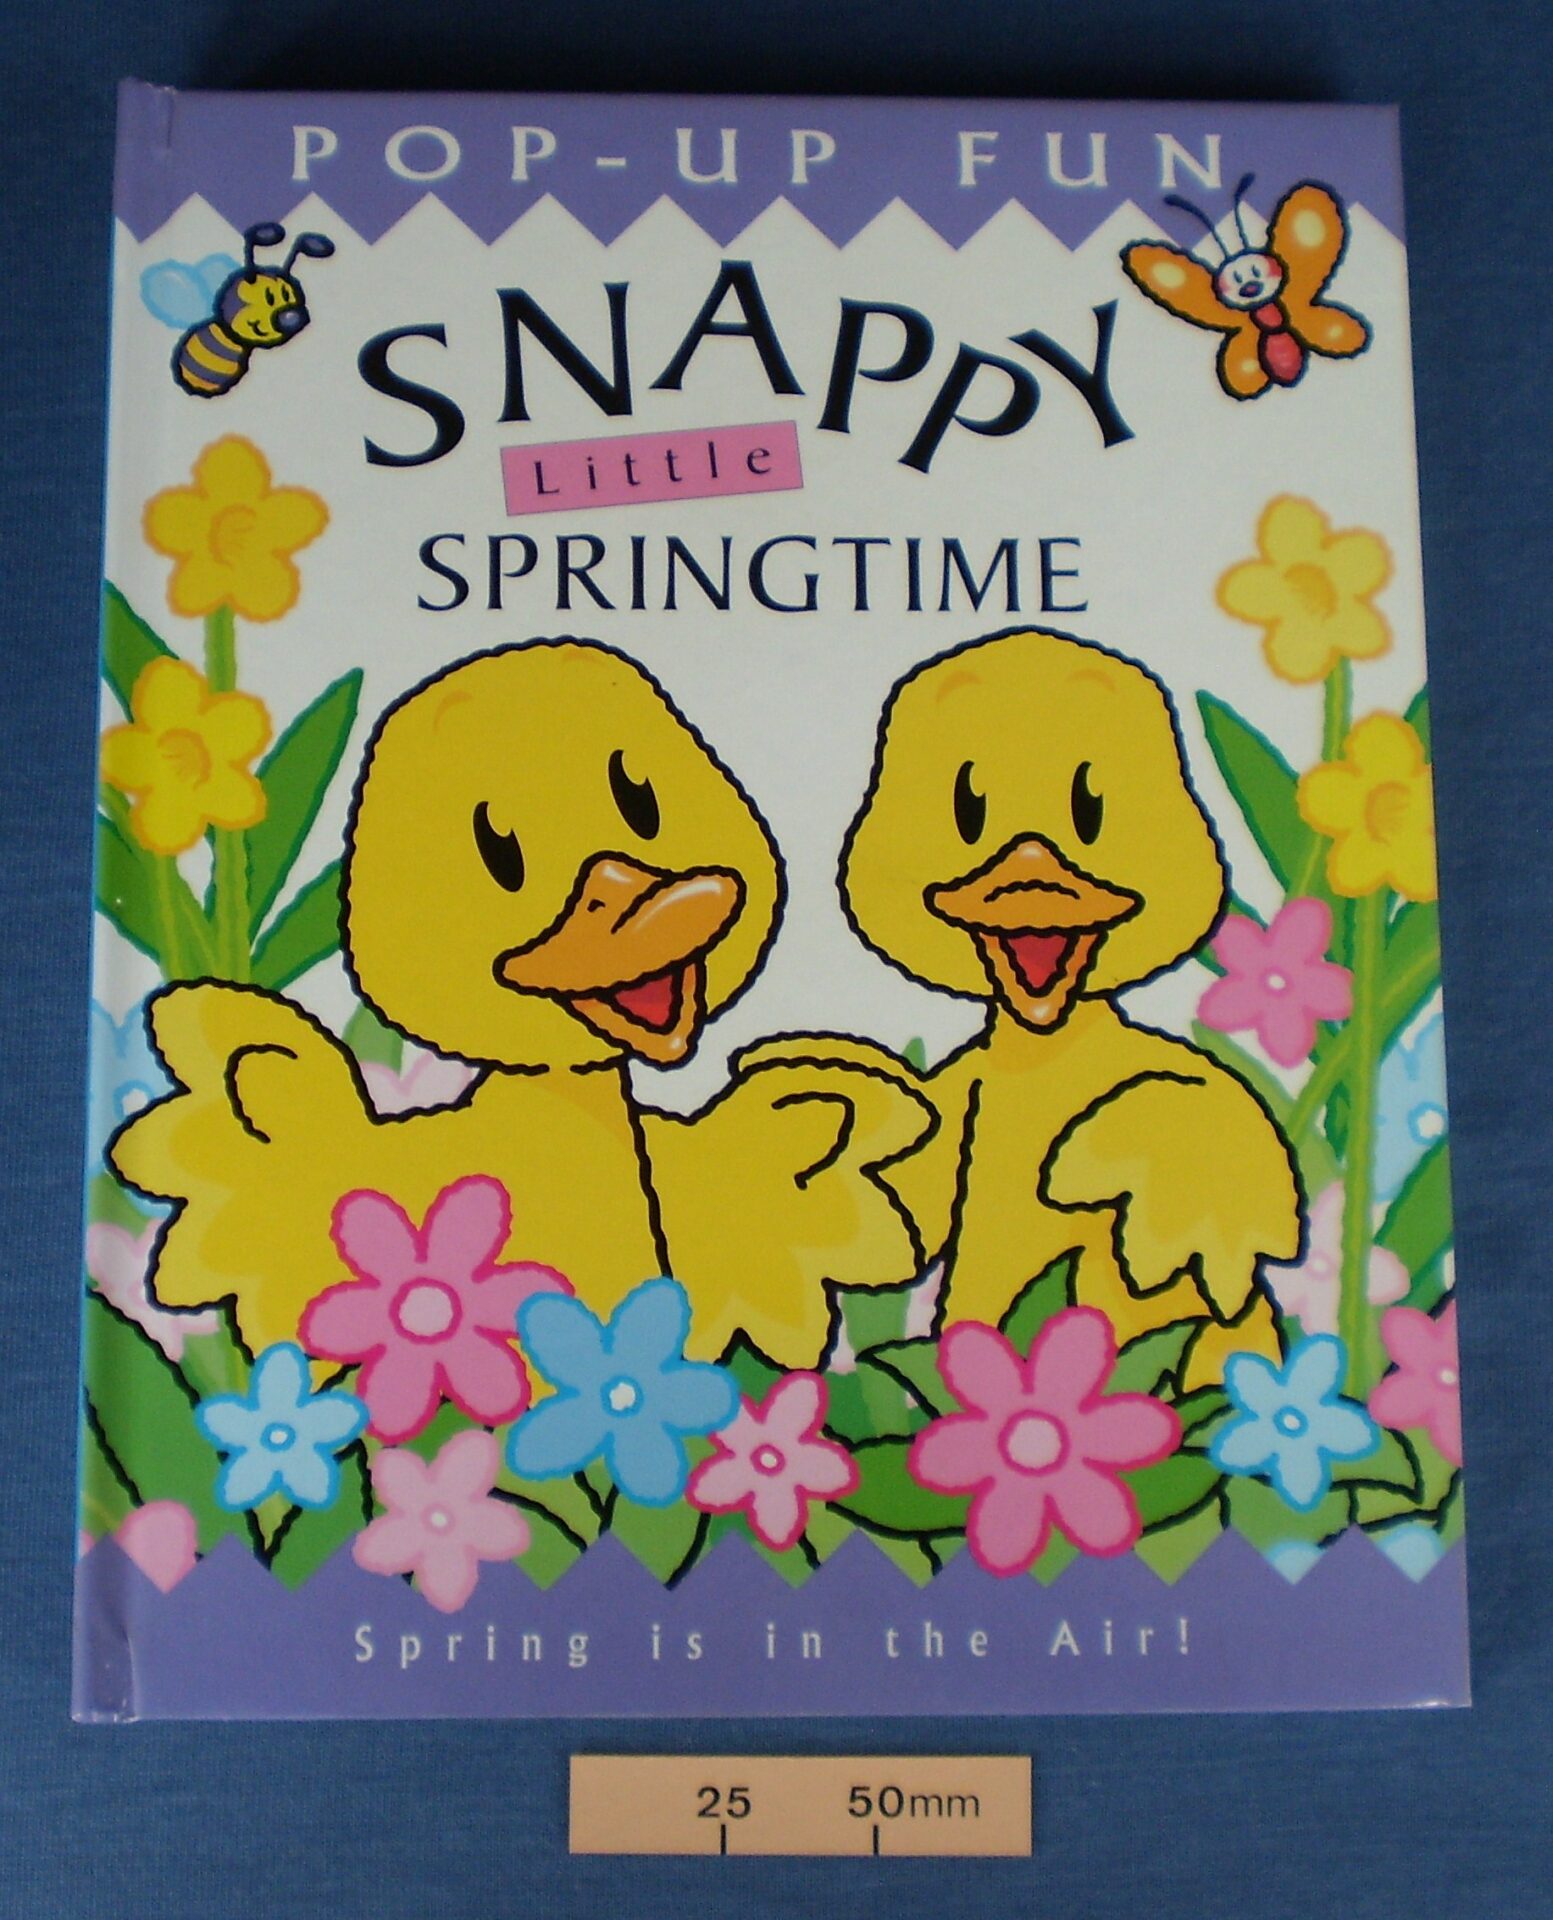 Pop-up book: ‘Snappy Little Springtime’